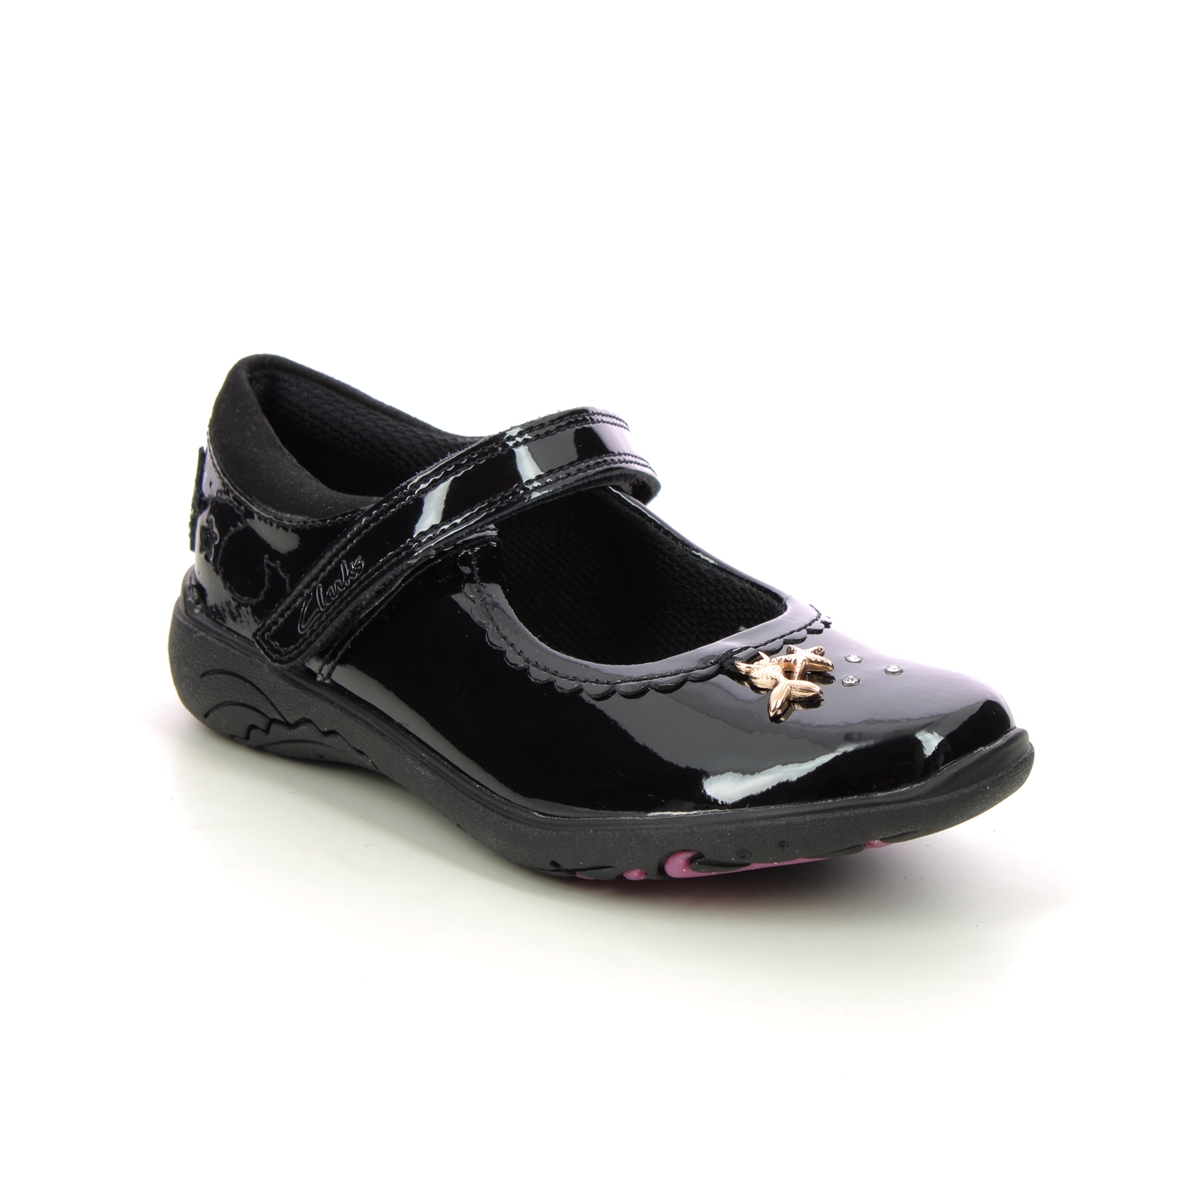 Clarks Relda Sea K Mary Jane Black Patent Kids Girls School Shoes 722417G In Size 1.5 In Plain Black Patent G Width Fitting For School For kids